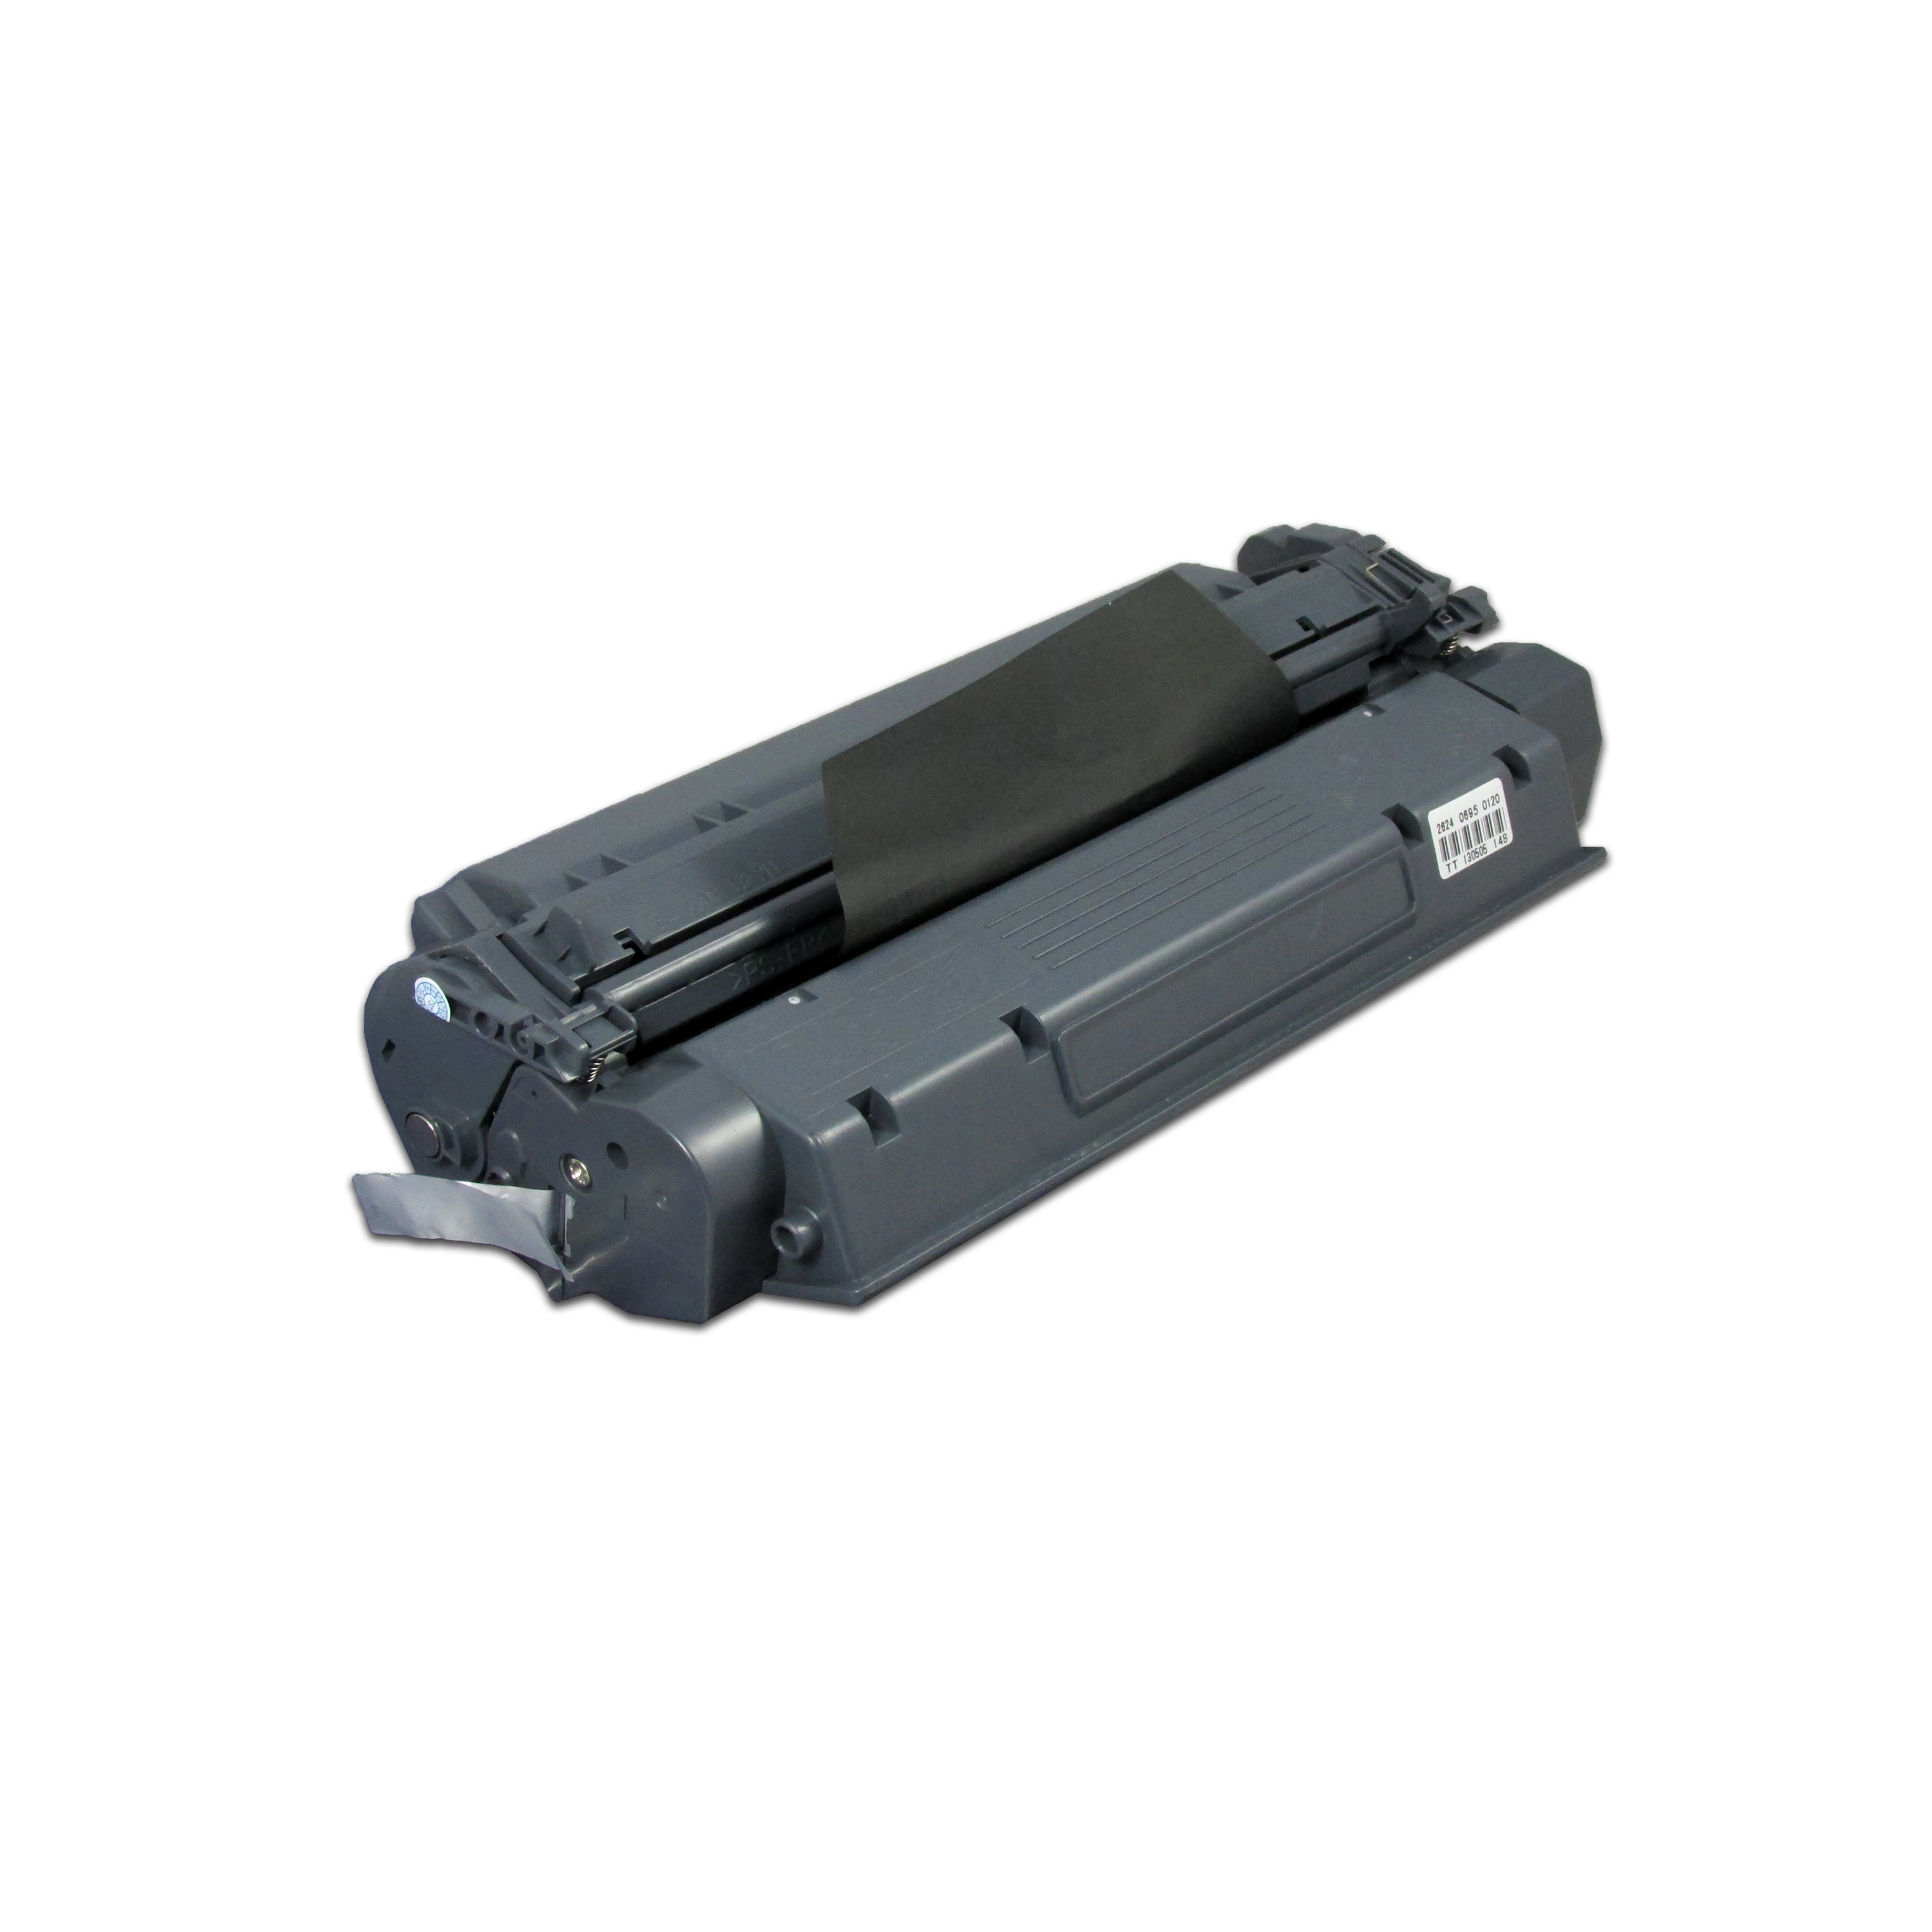 Q2624A toner cartridge Use For 1150/1150N